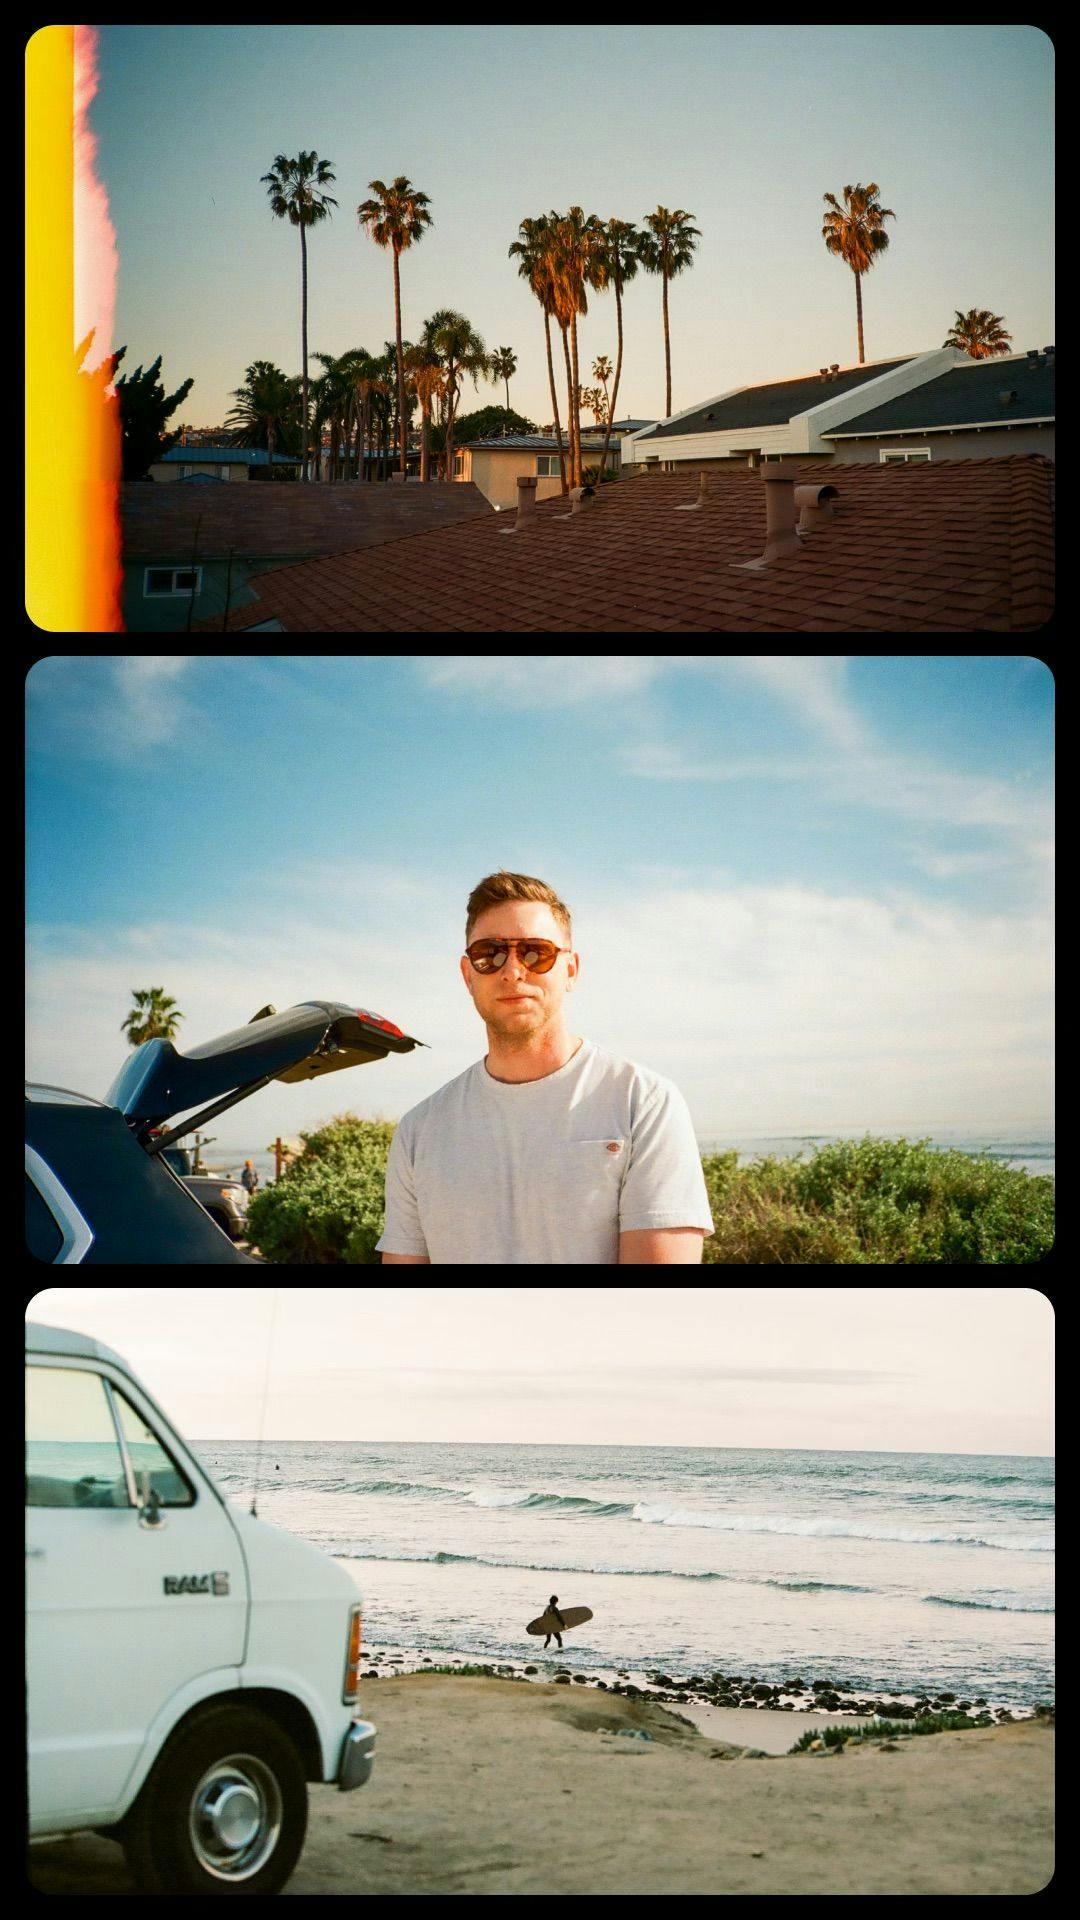 Palm trees, Matt Genders, and a surfer film reel